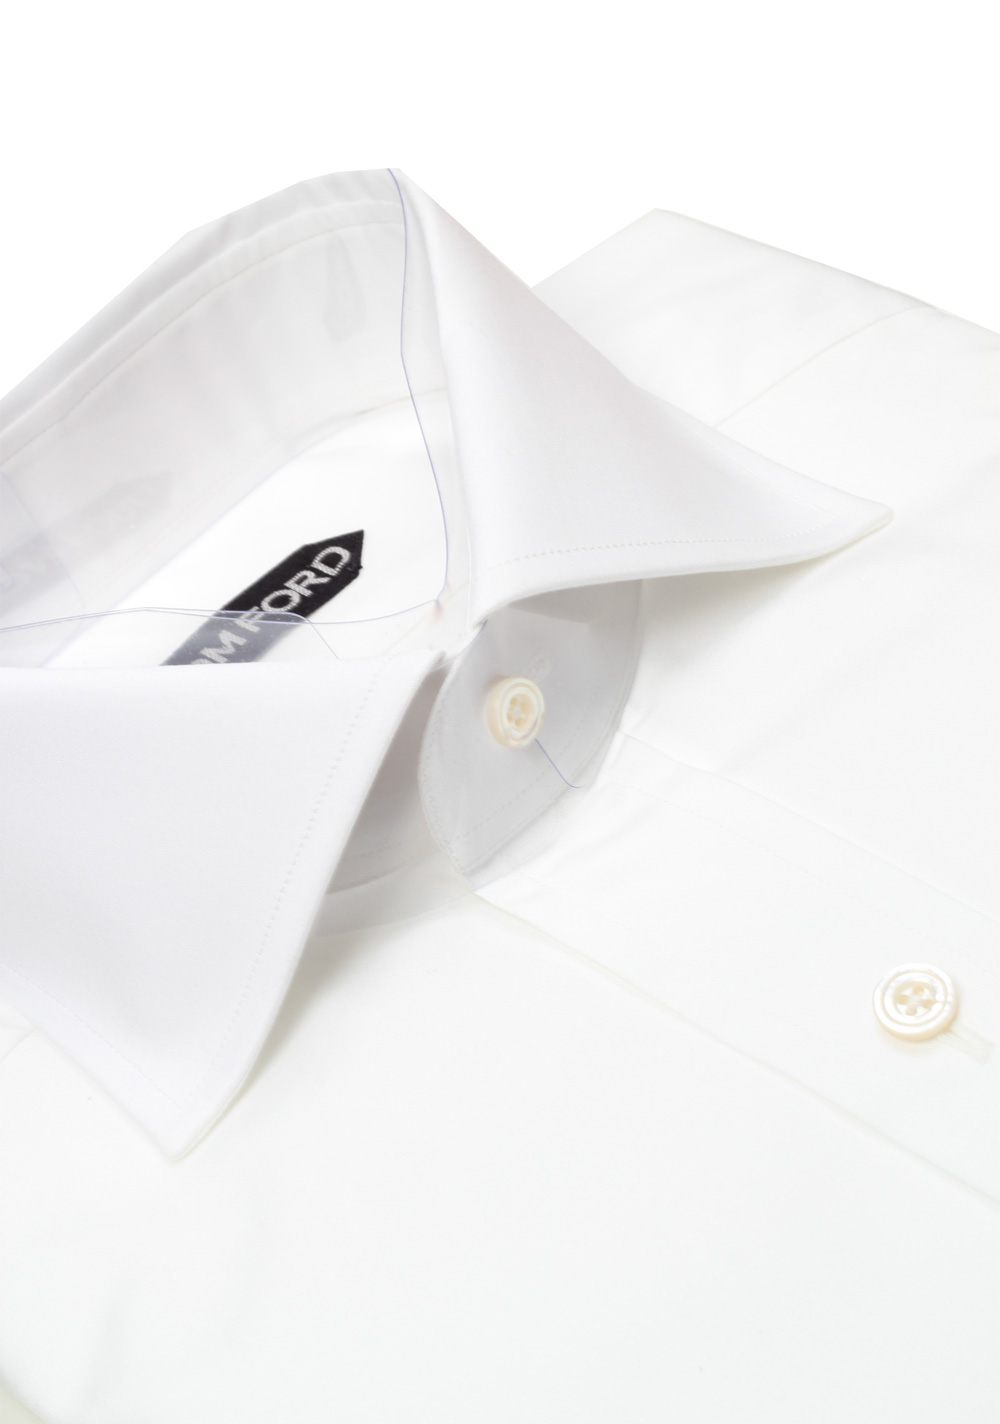 TOM FORD Solid White Dress Shirt Size 37 / 14,5 U.S. Slim Fit | Costume Limité